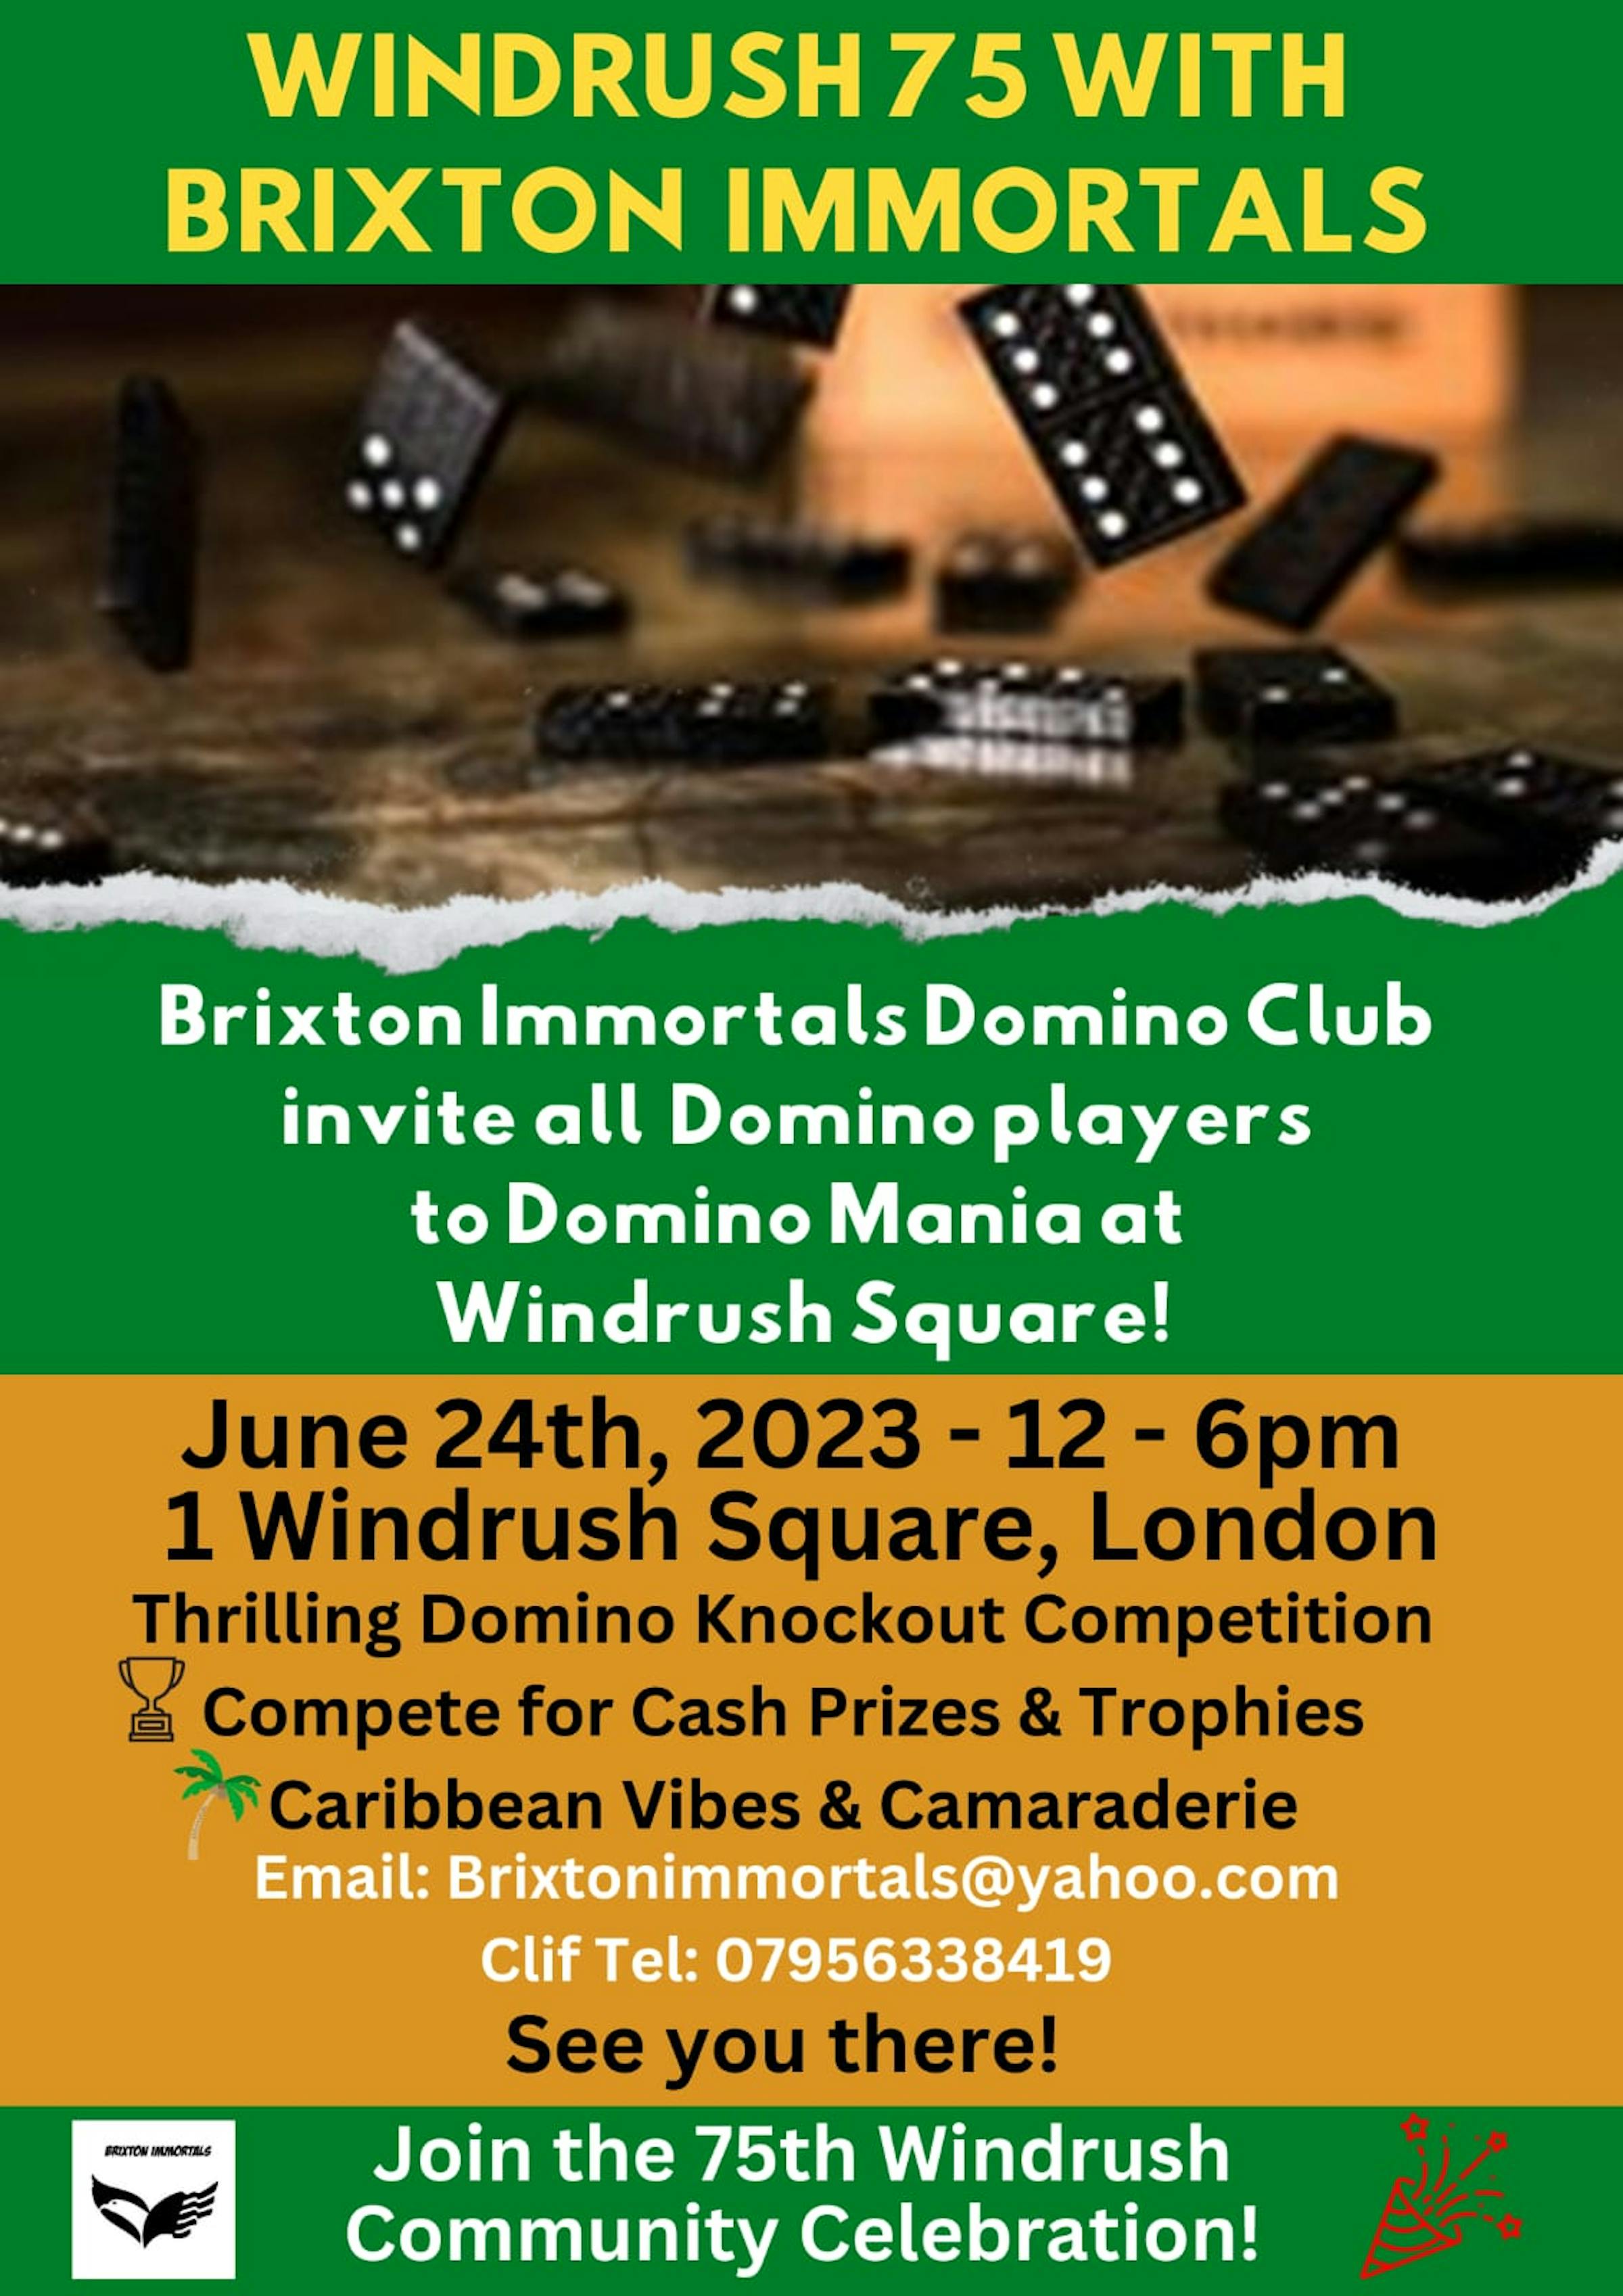 Celebrate Windrush 75 with Brixton Immortals!